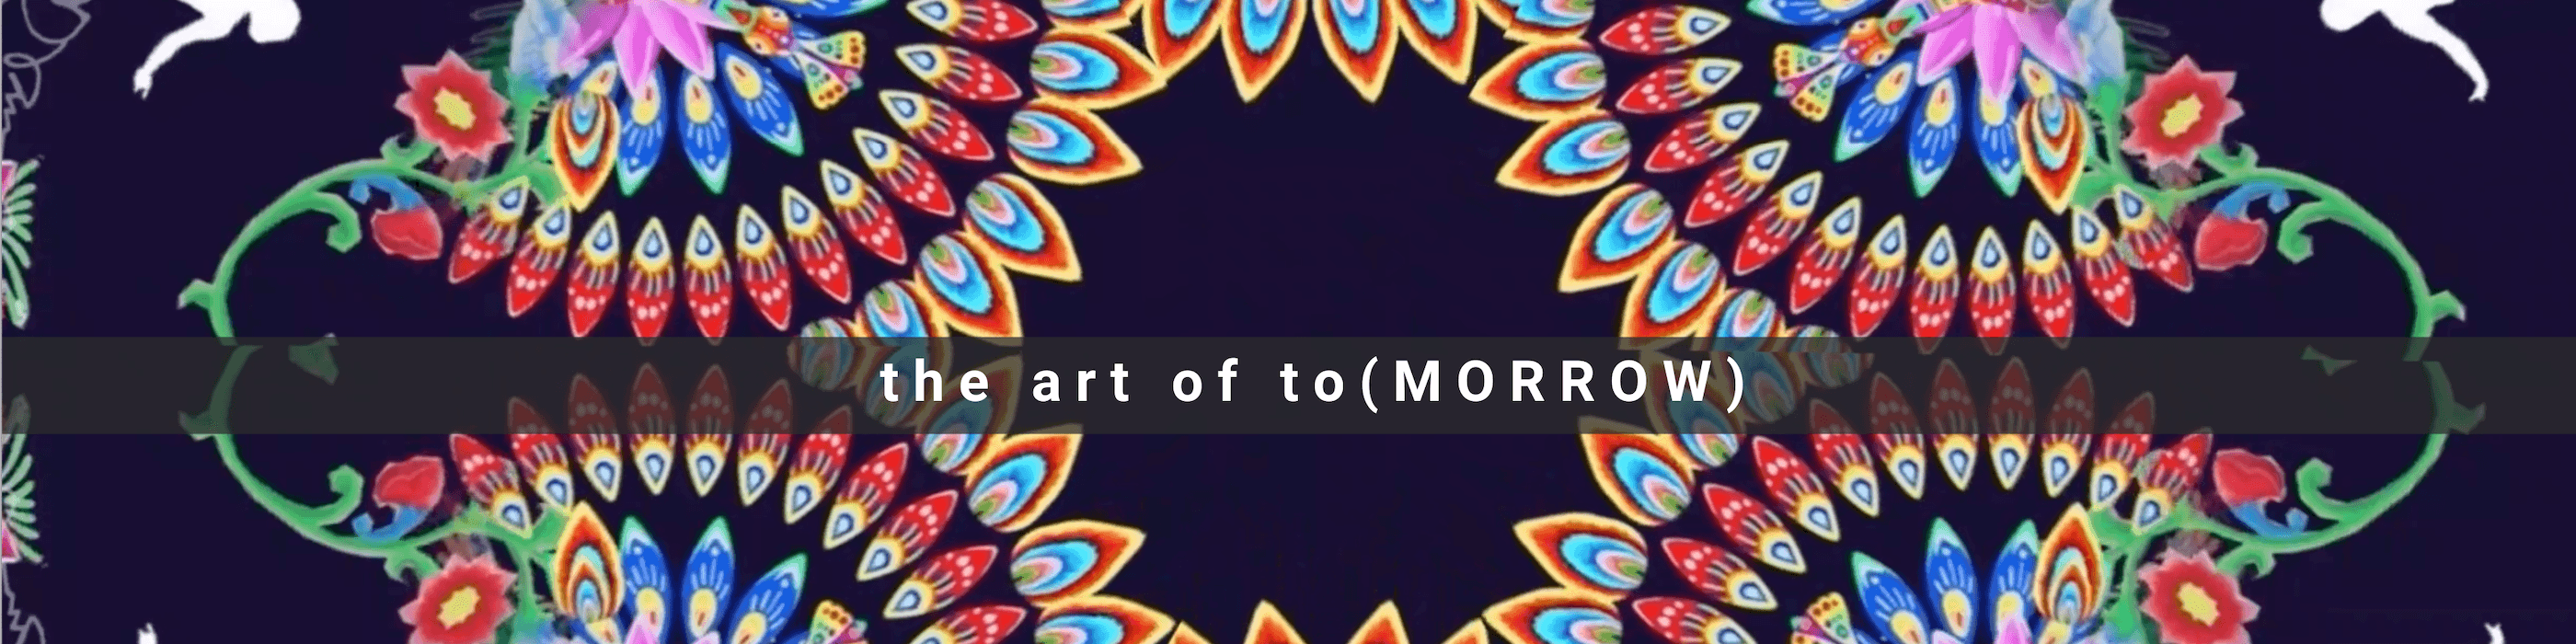 MORROW_collective banner